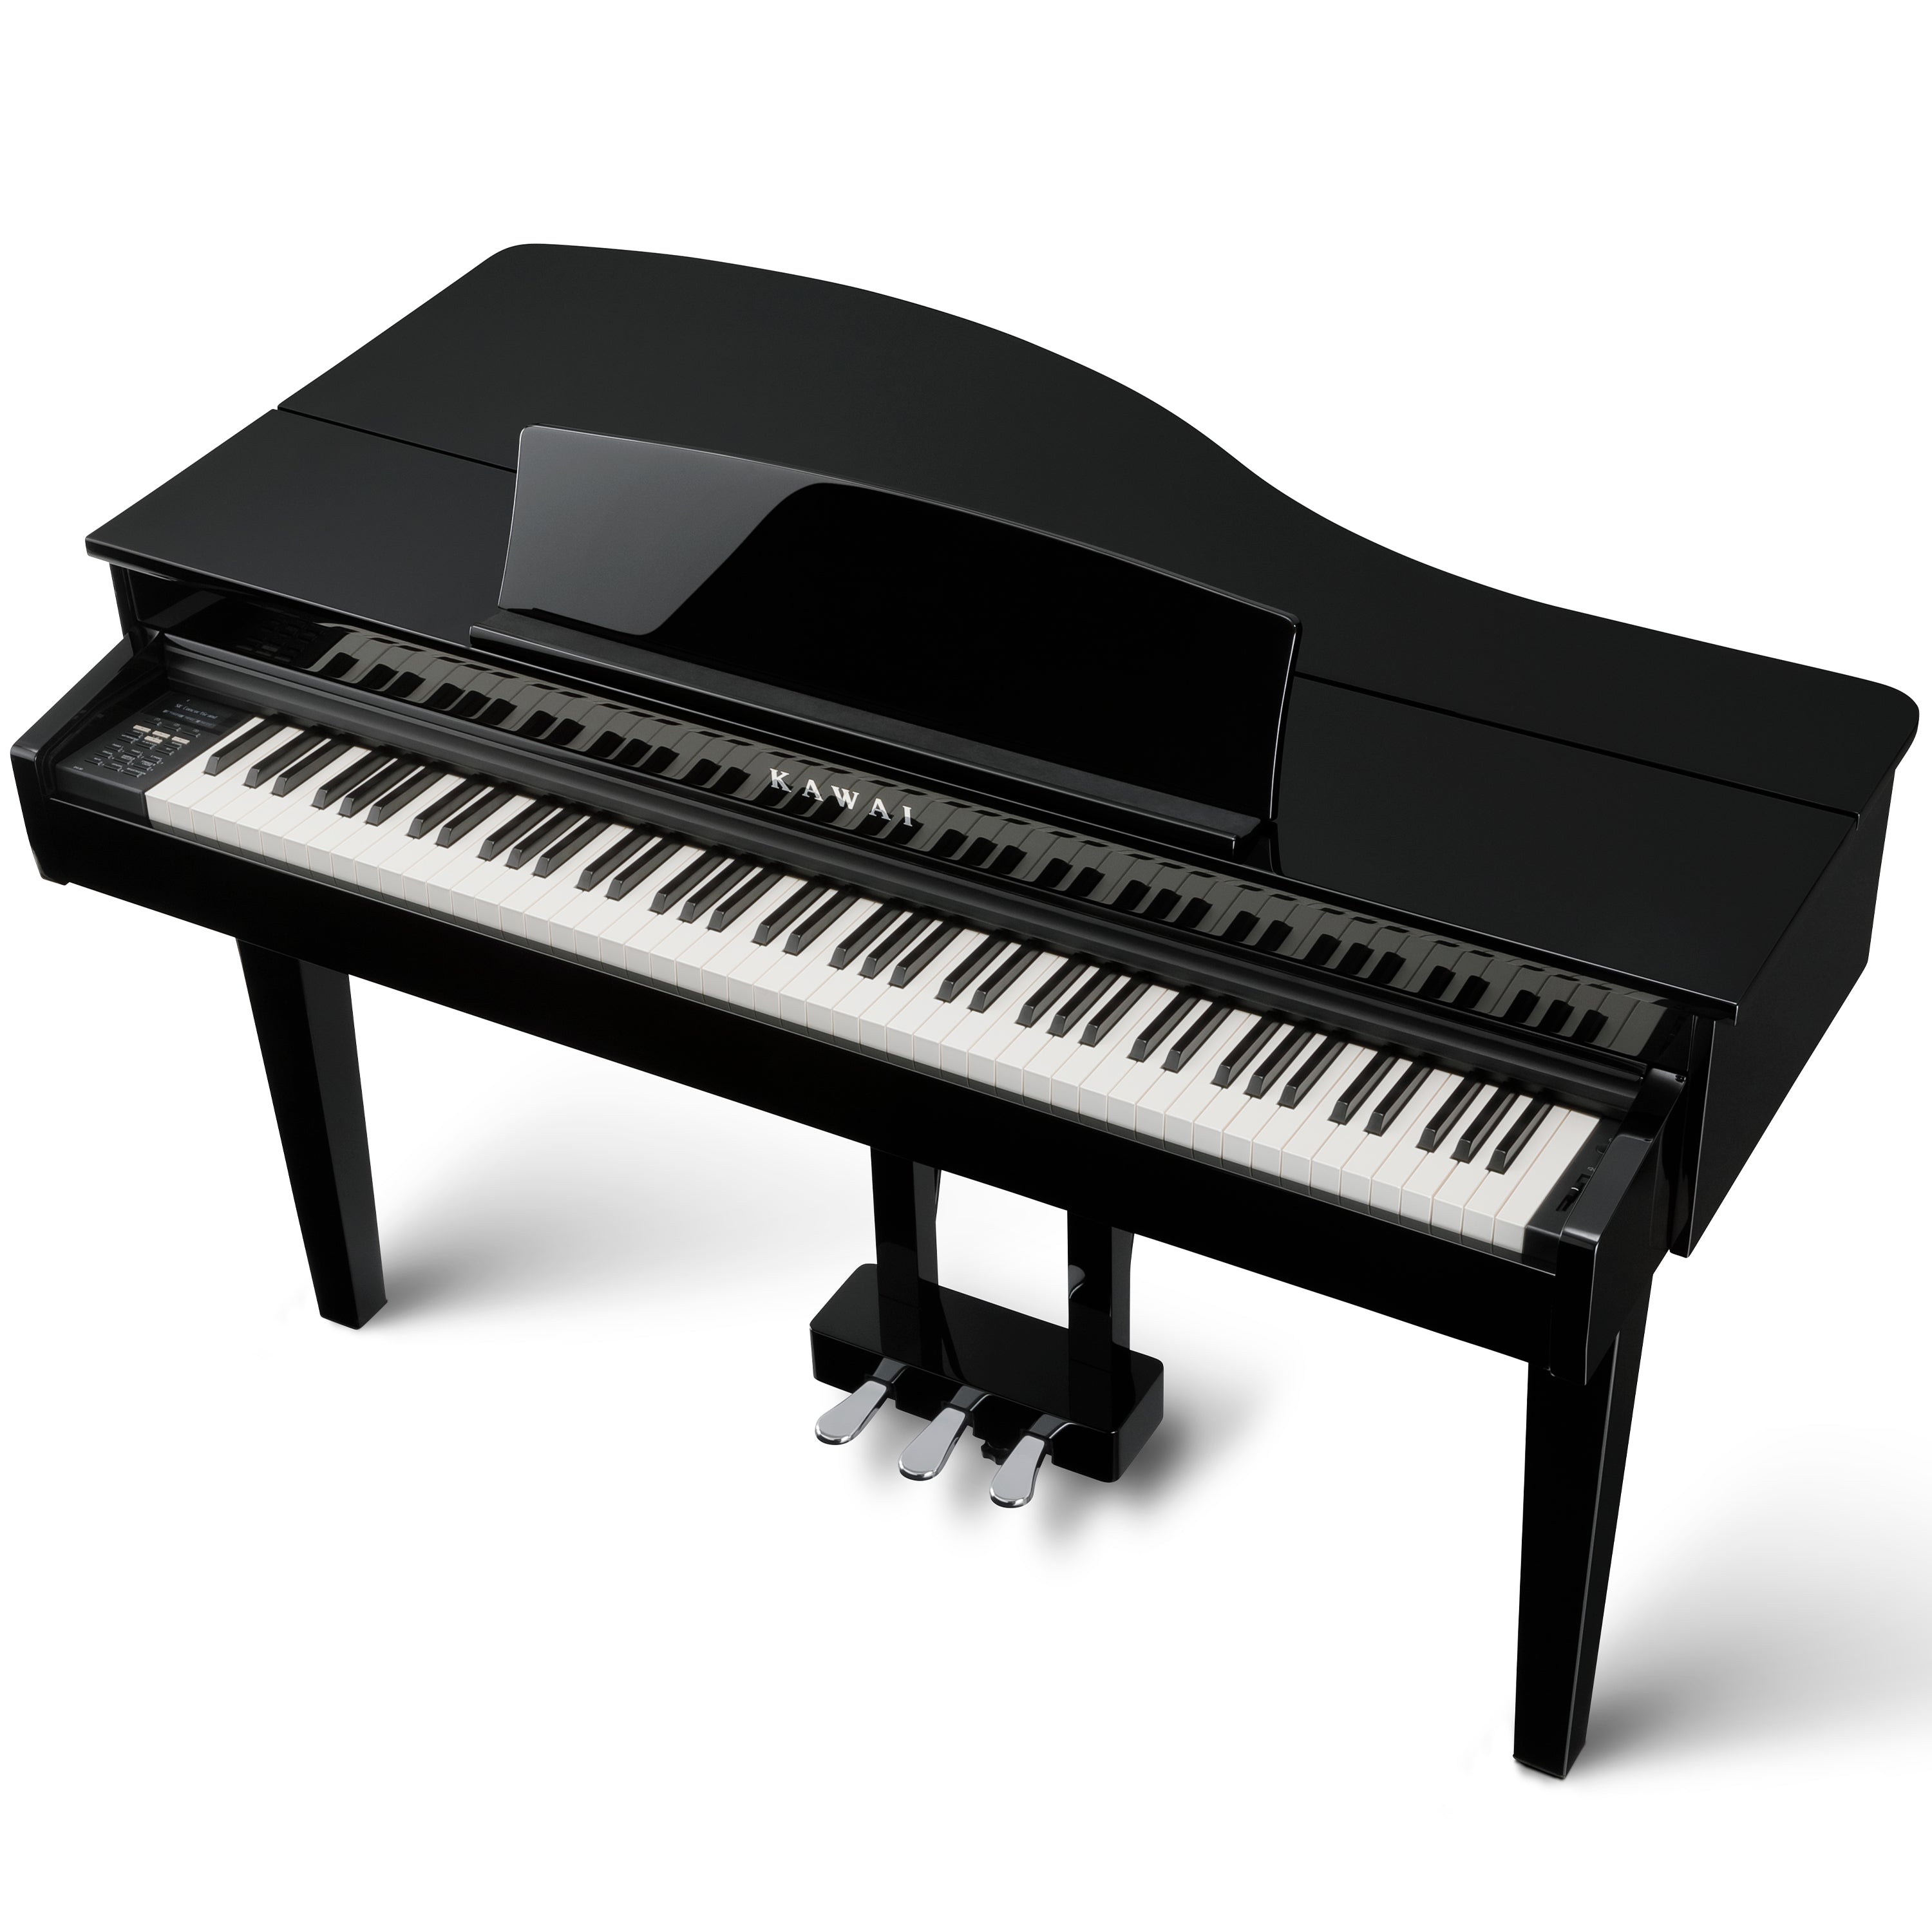 Kawai DG30 Digital Grand Piano - Ebony Polish - from above with lid closed